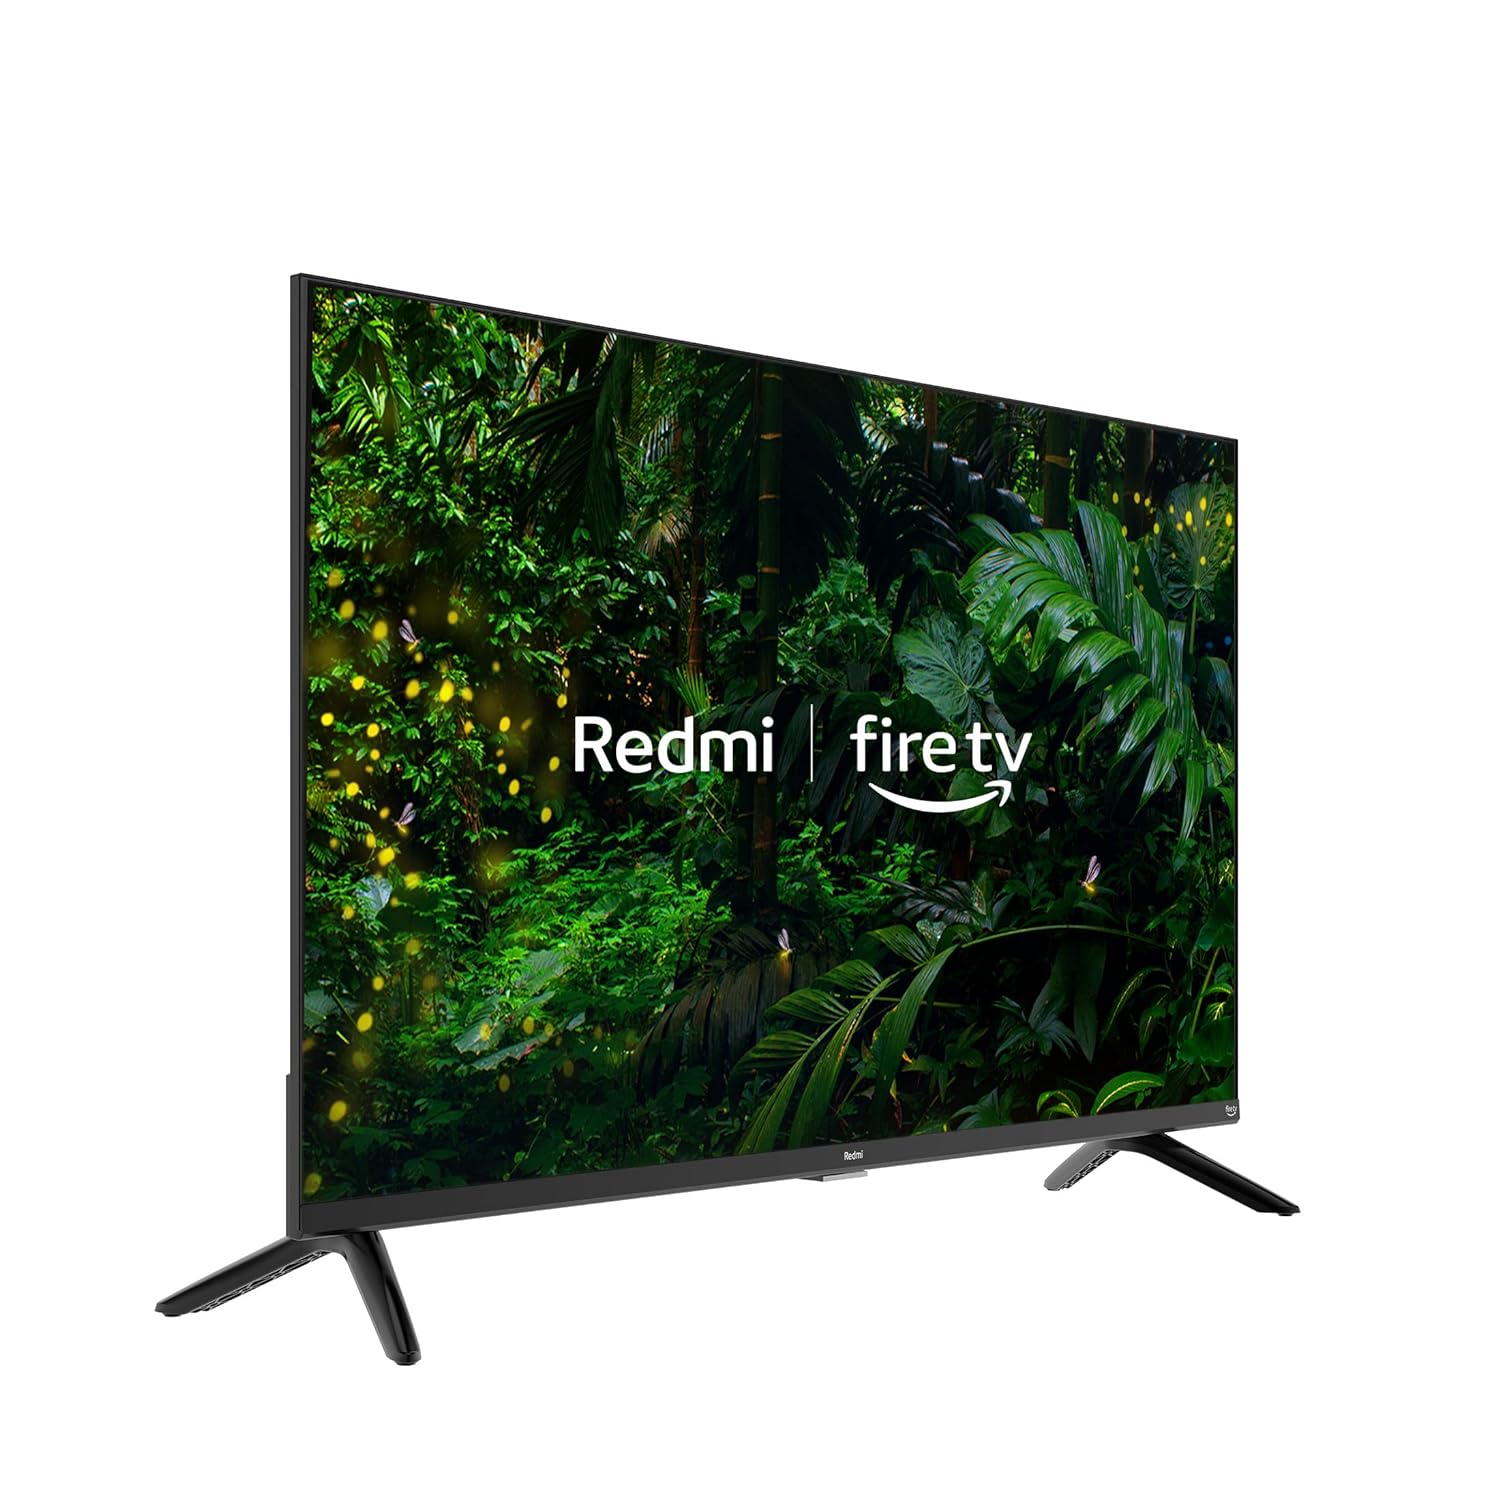 Redmi 80 cm (32 inches) F Series HD Ready Smart LED Fire TV L32R8-FVIN